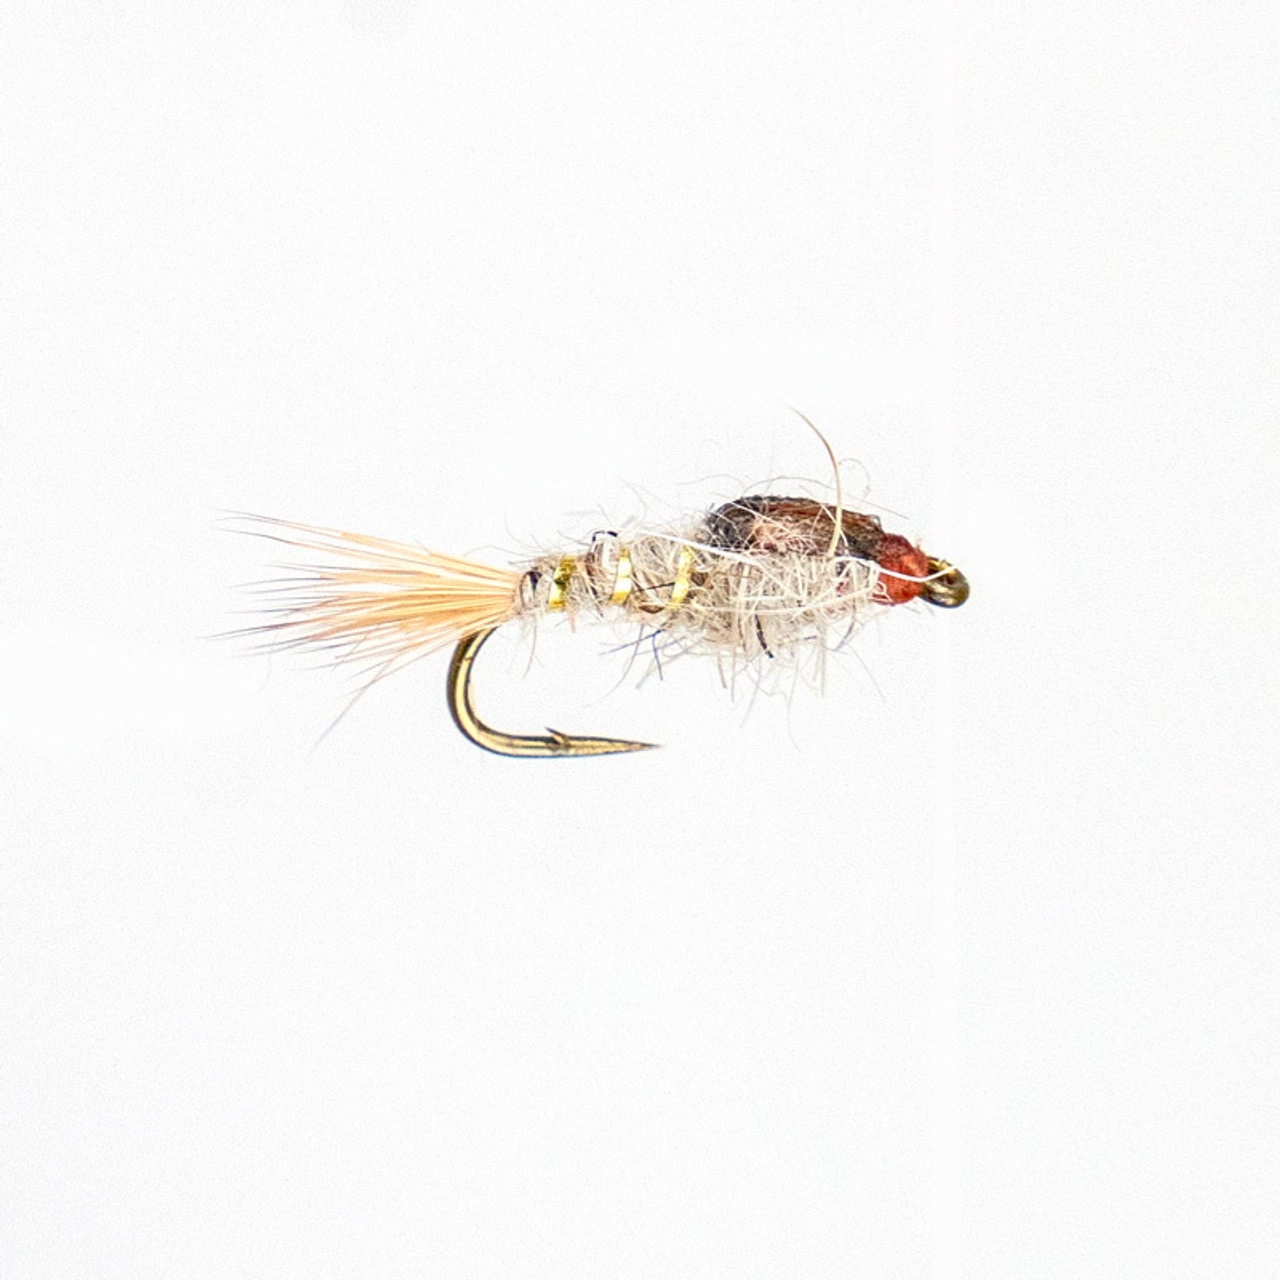 Little Truckee River Fly Set - Winter